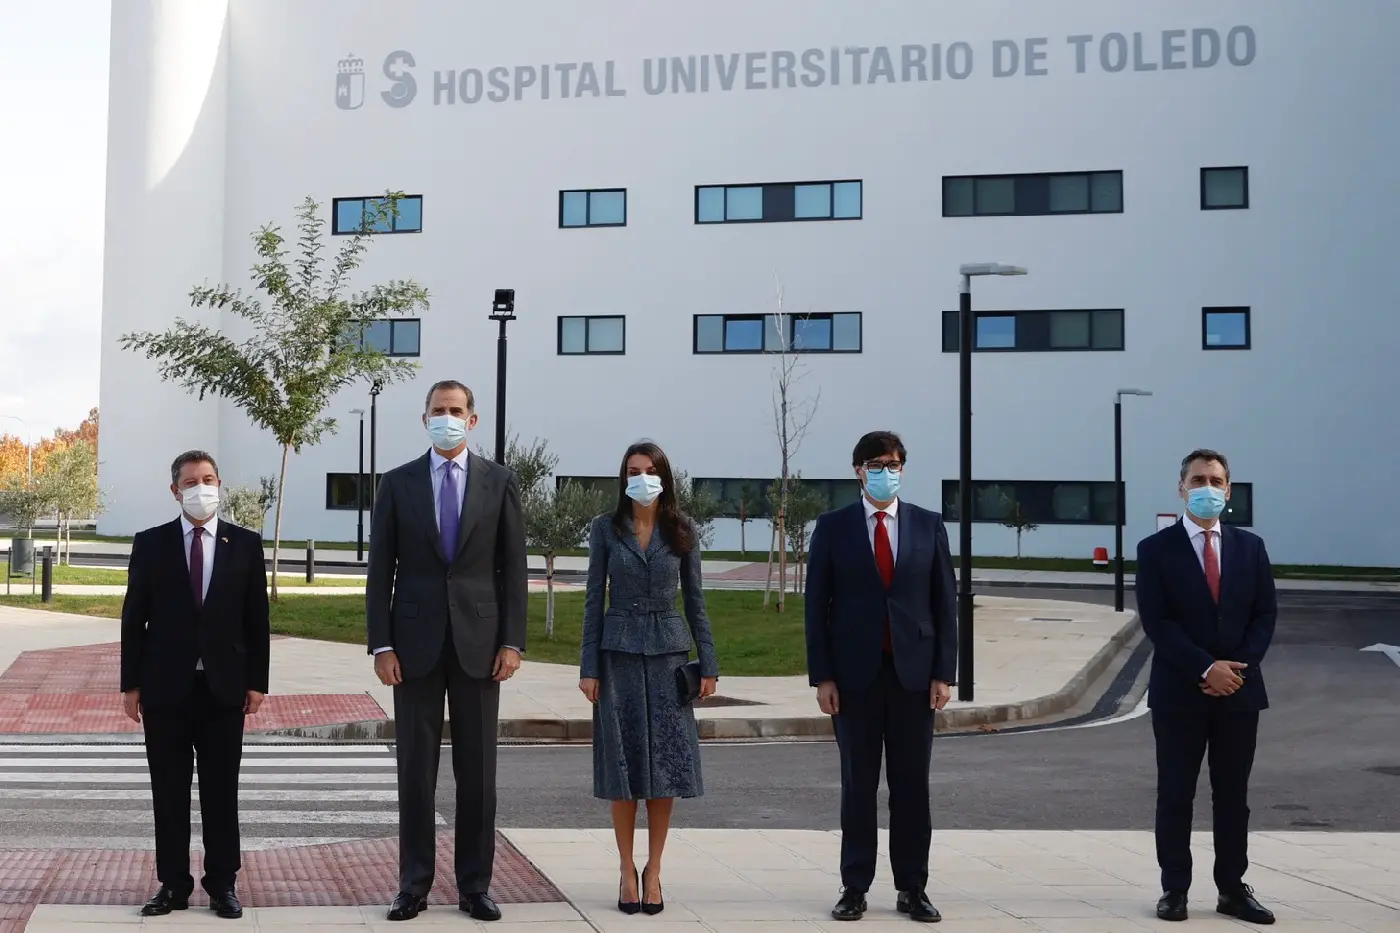 King Felipe and Queen Letizia of Spain visited the Toledo University Hospital